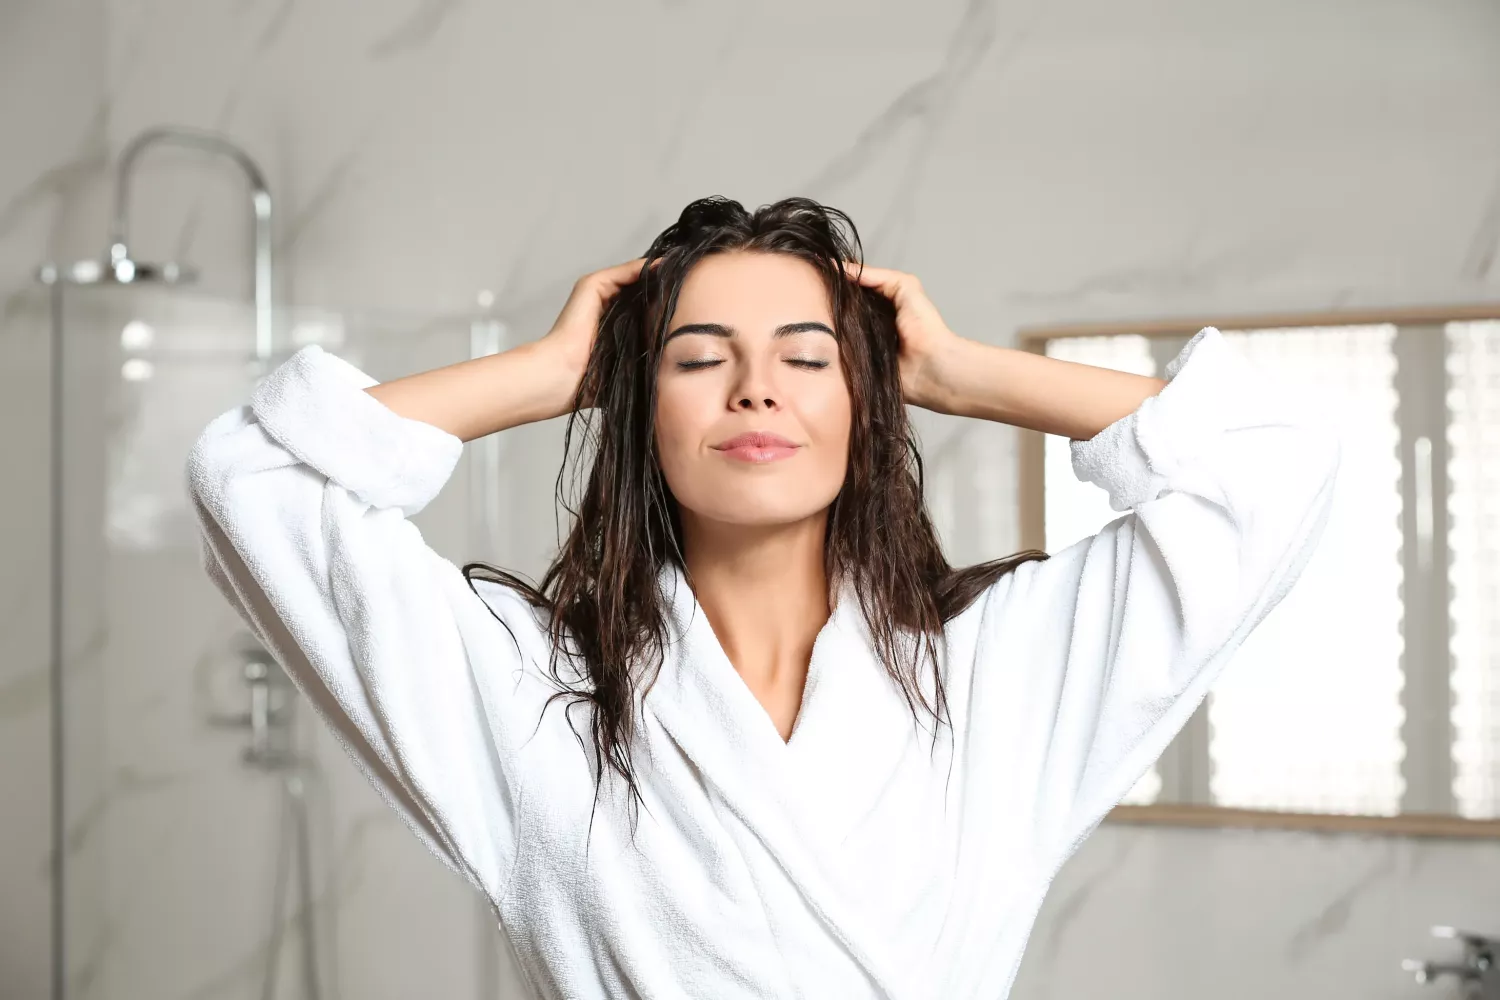 Woman Massages Her Head After Shower